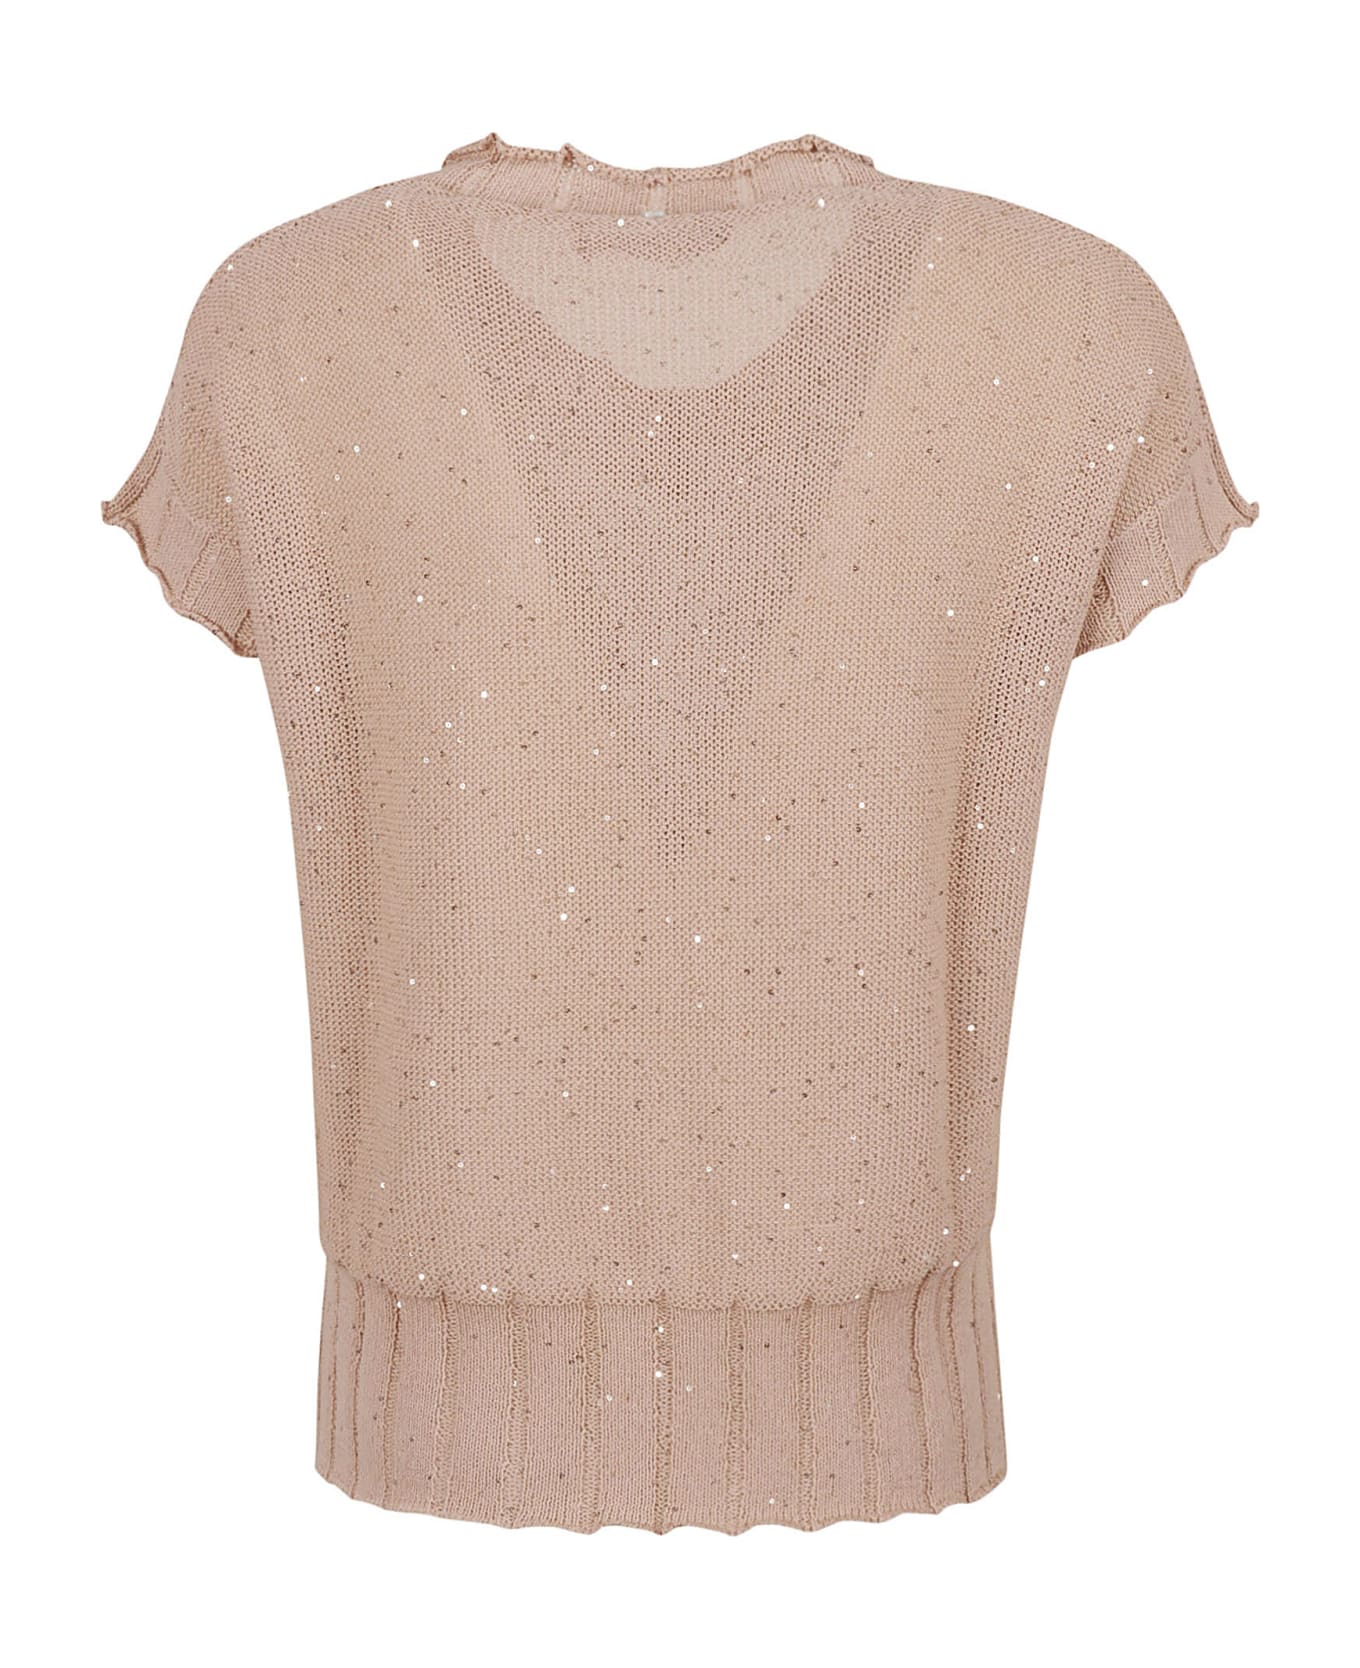 Lorena Antoniazzi Side Slit Embellished Knit Top - Light Pink